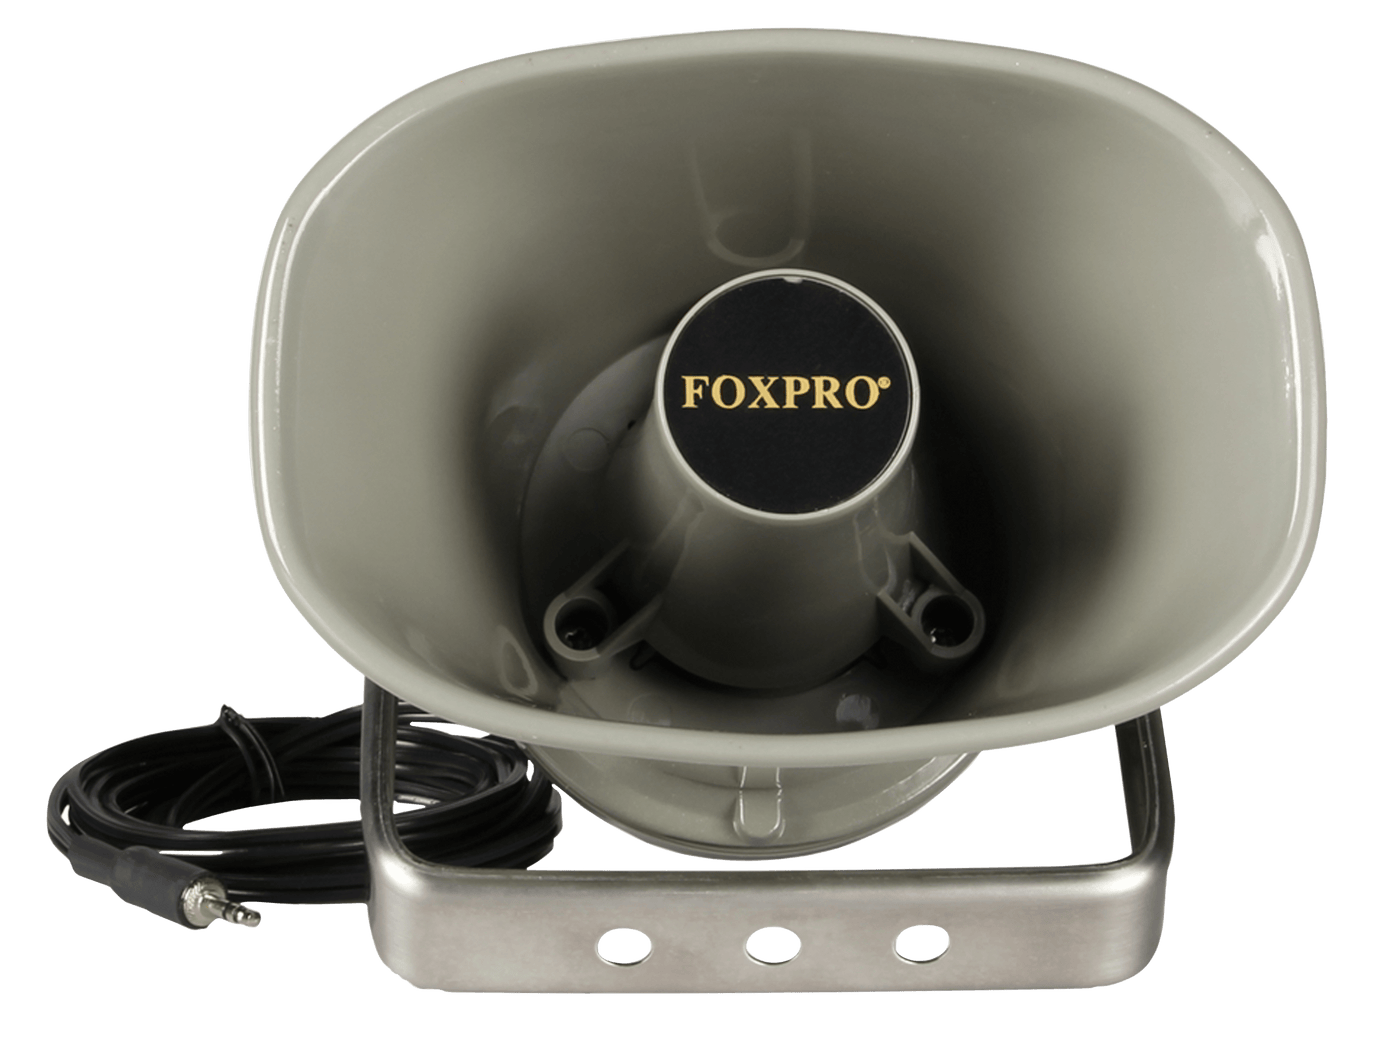 Foxpro Foxpro External Speaker, Foxpro Sp-60           Speaker/cable Hunting